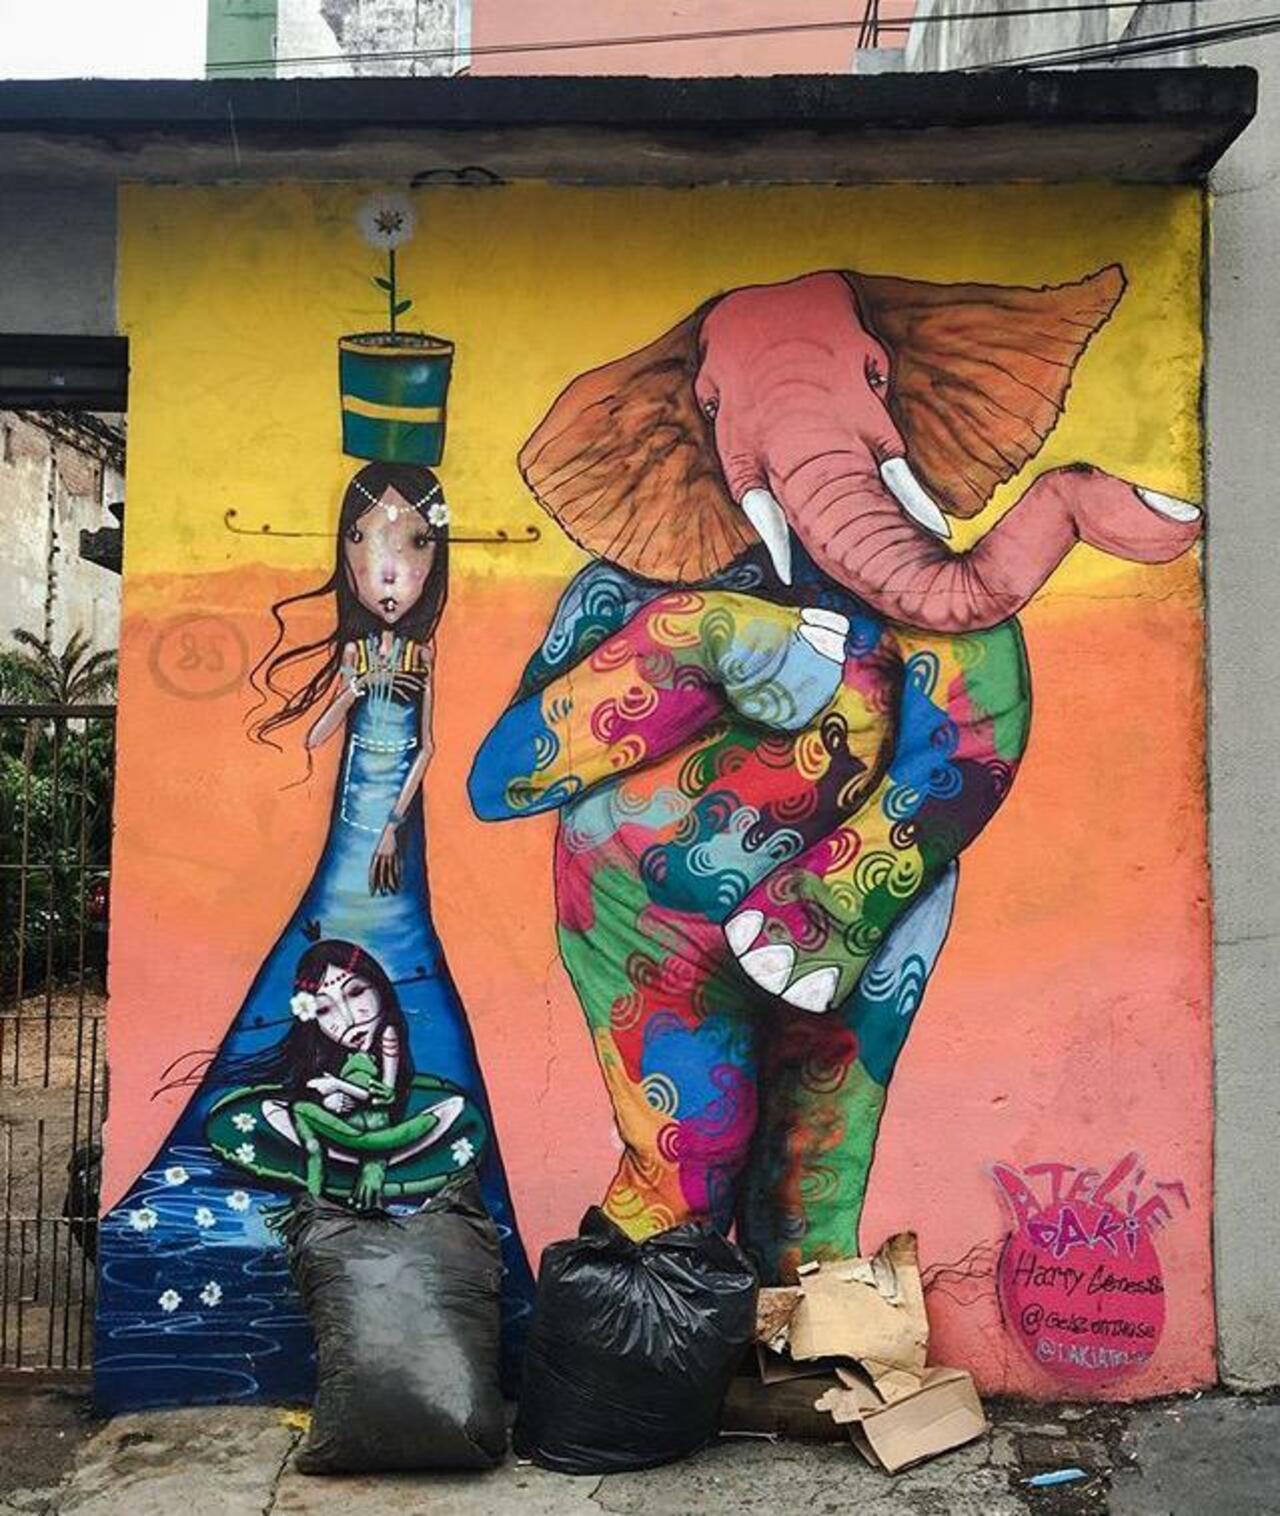 Street Art by Harry Geneis & Gelson in São Paulo #art #mural #graffiti #streetart http://t.co/SlLbhuMZfD … … …… … http://twitter.com/charlesjackso14/status/648018143269527552